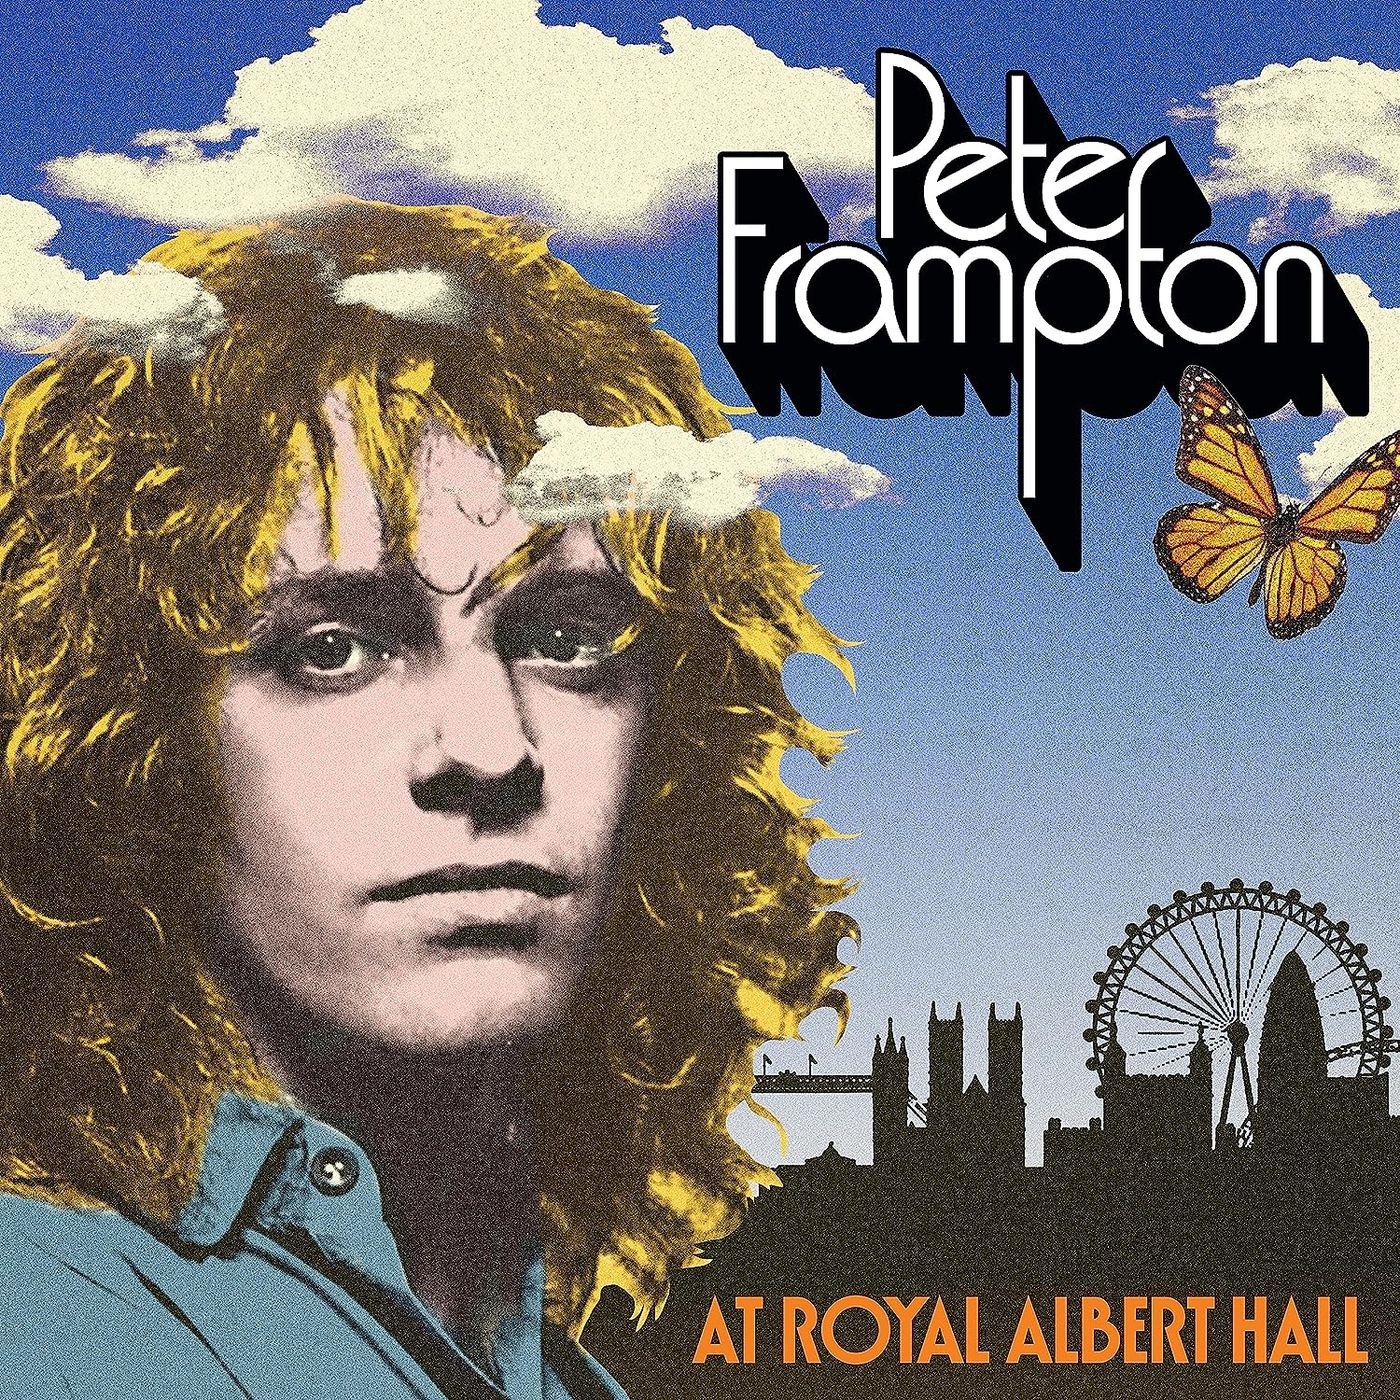 atualizando a minha playlist - ep 107 - Peter Frampton  At Royal Albert Hall